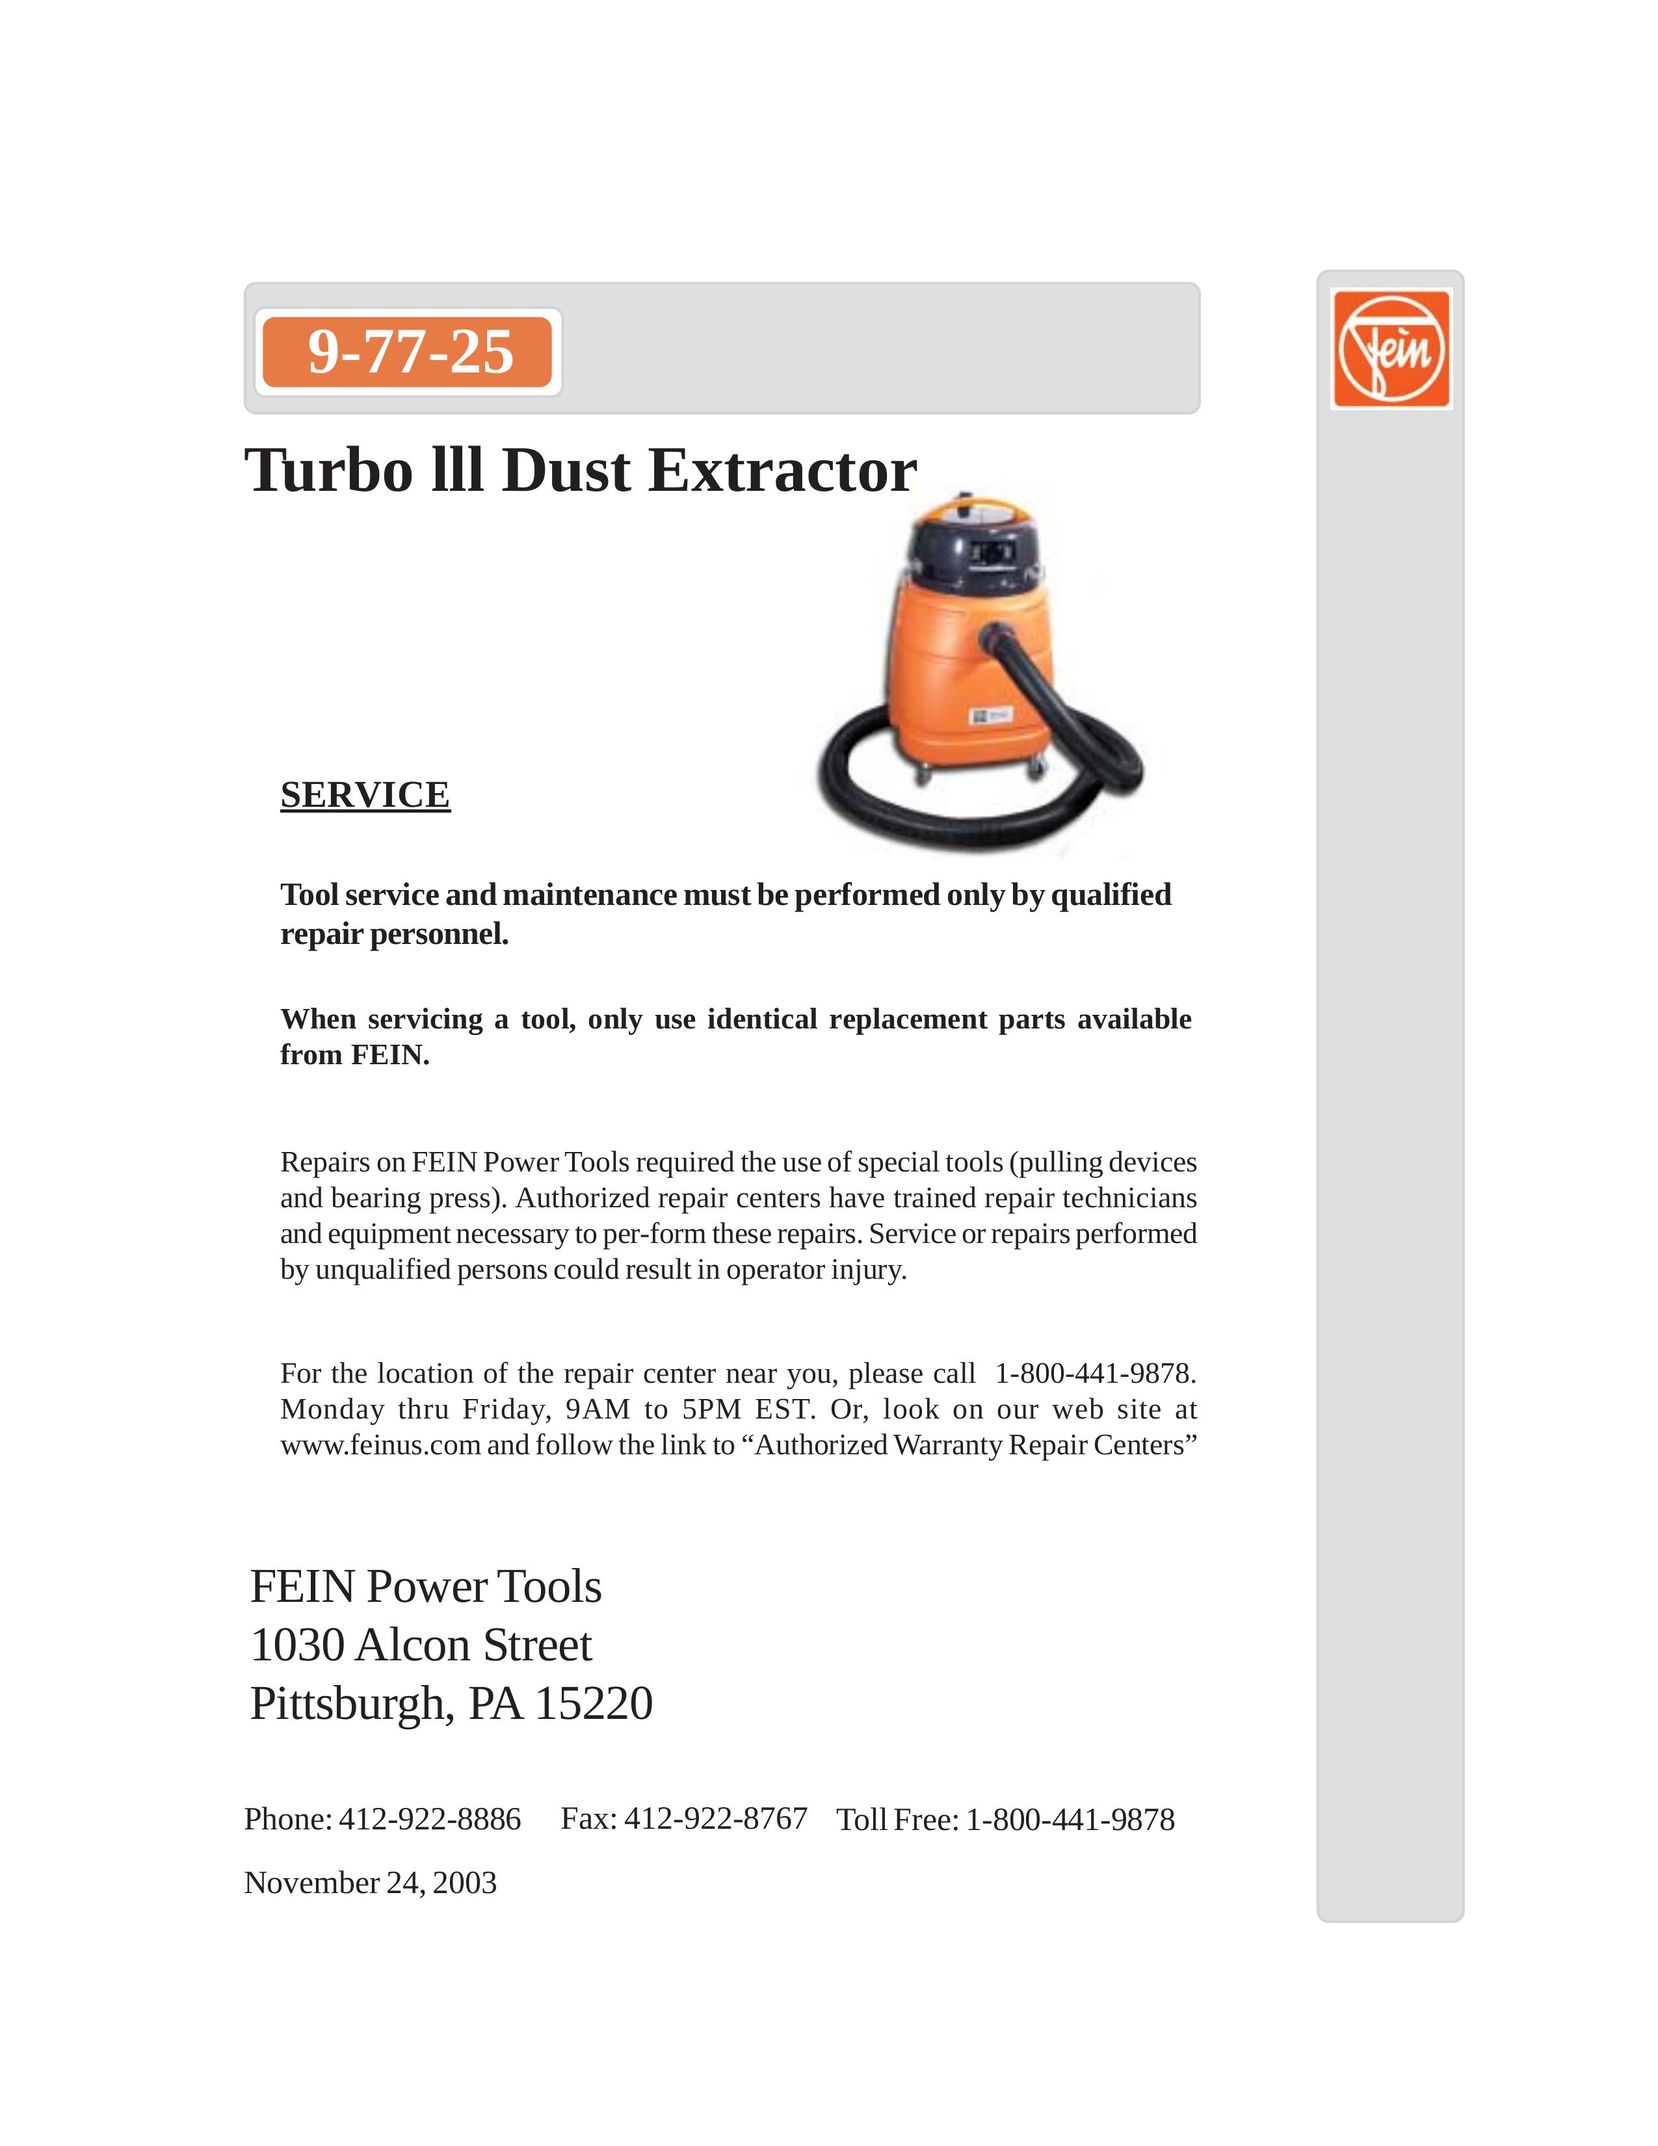 FEIN Power Tools 9-77-25 Vacuum Cleaner User Manual